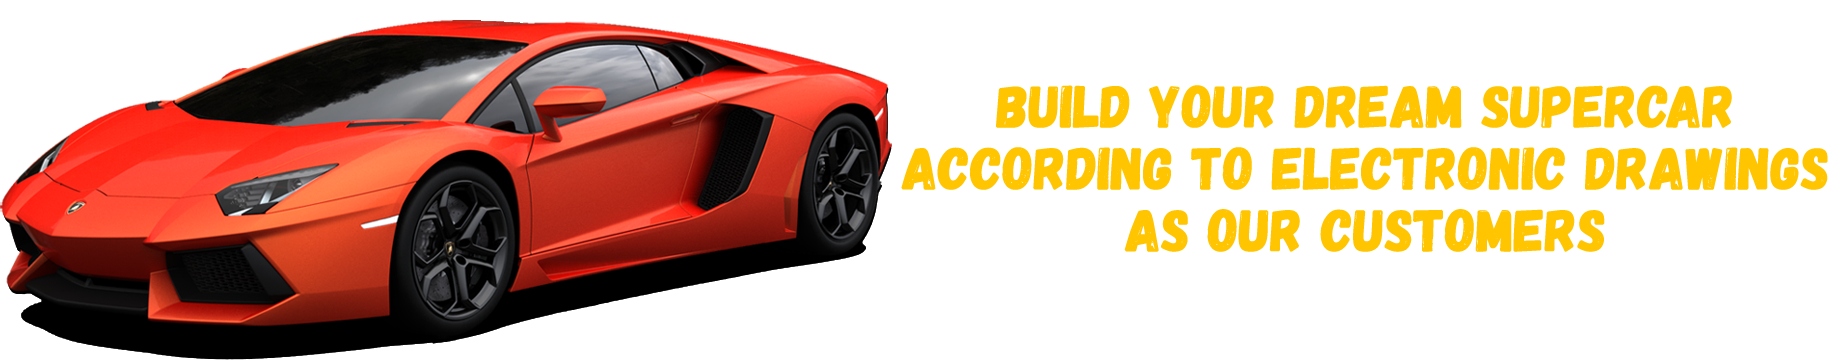 Build your dream car (kit car) from digital car buck files